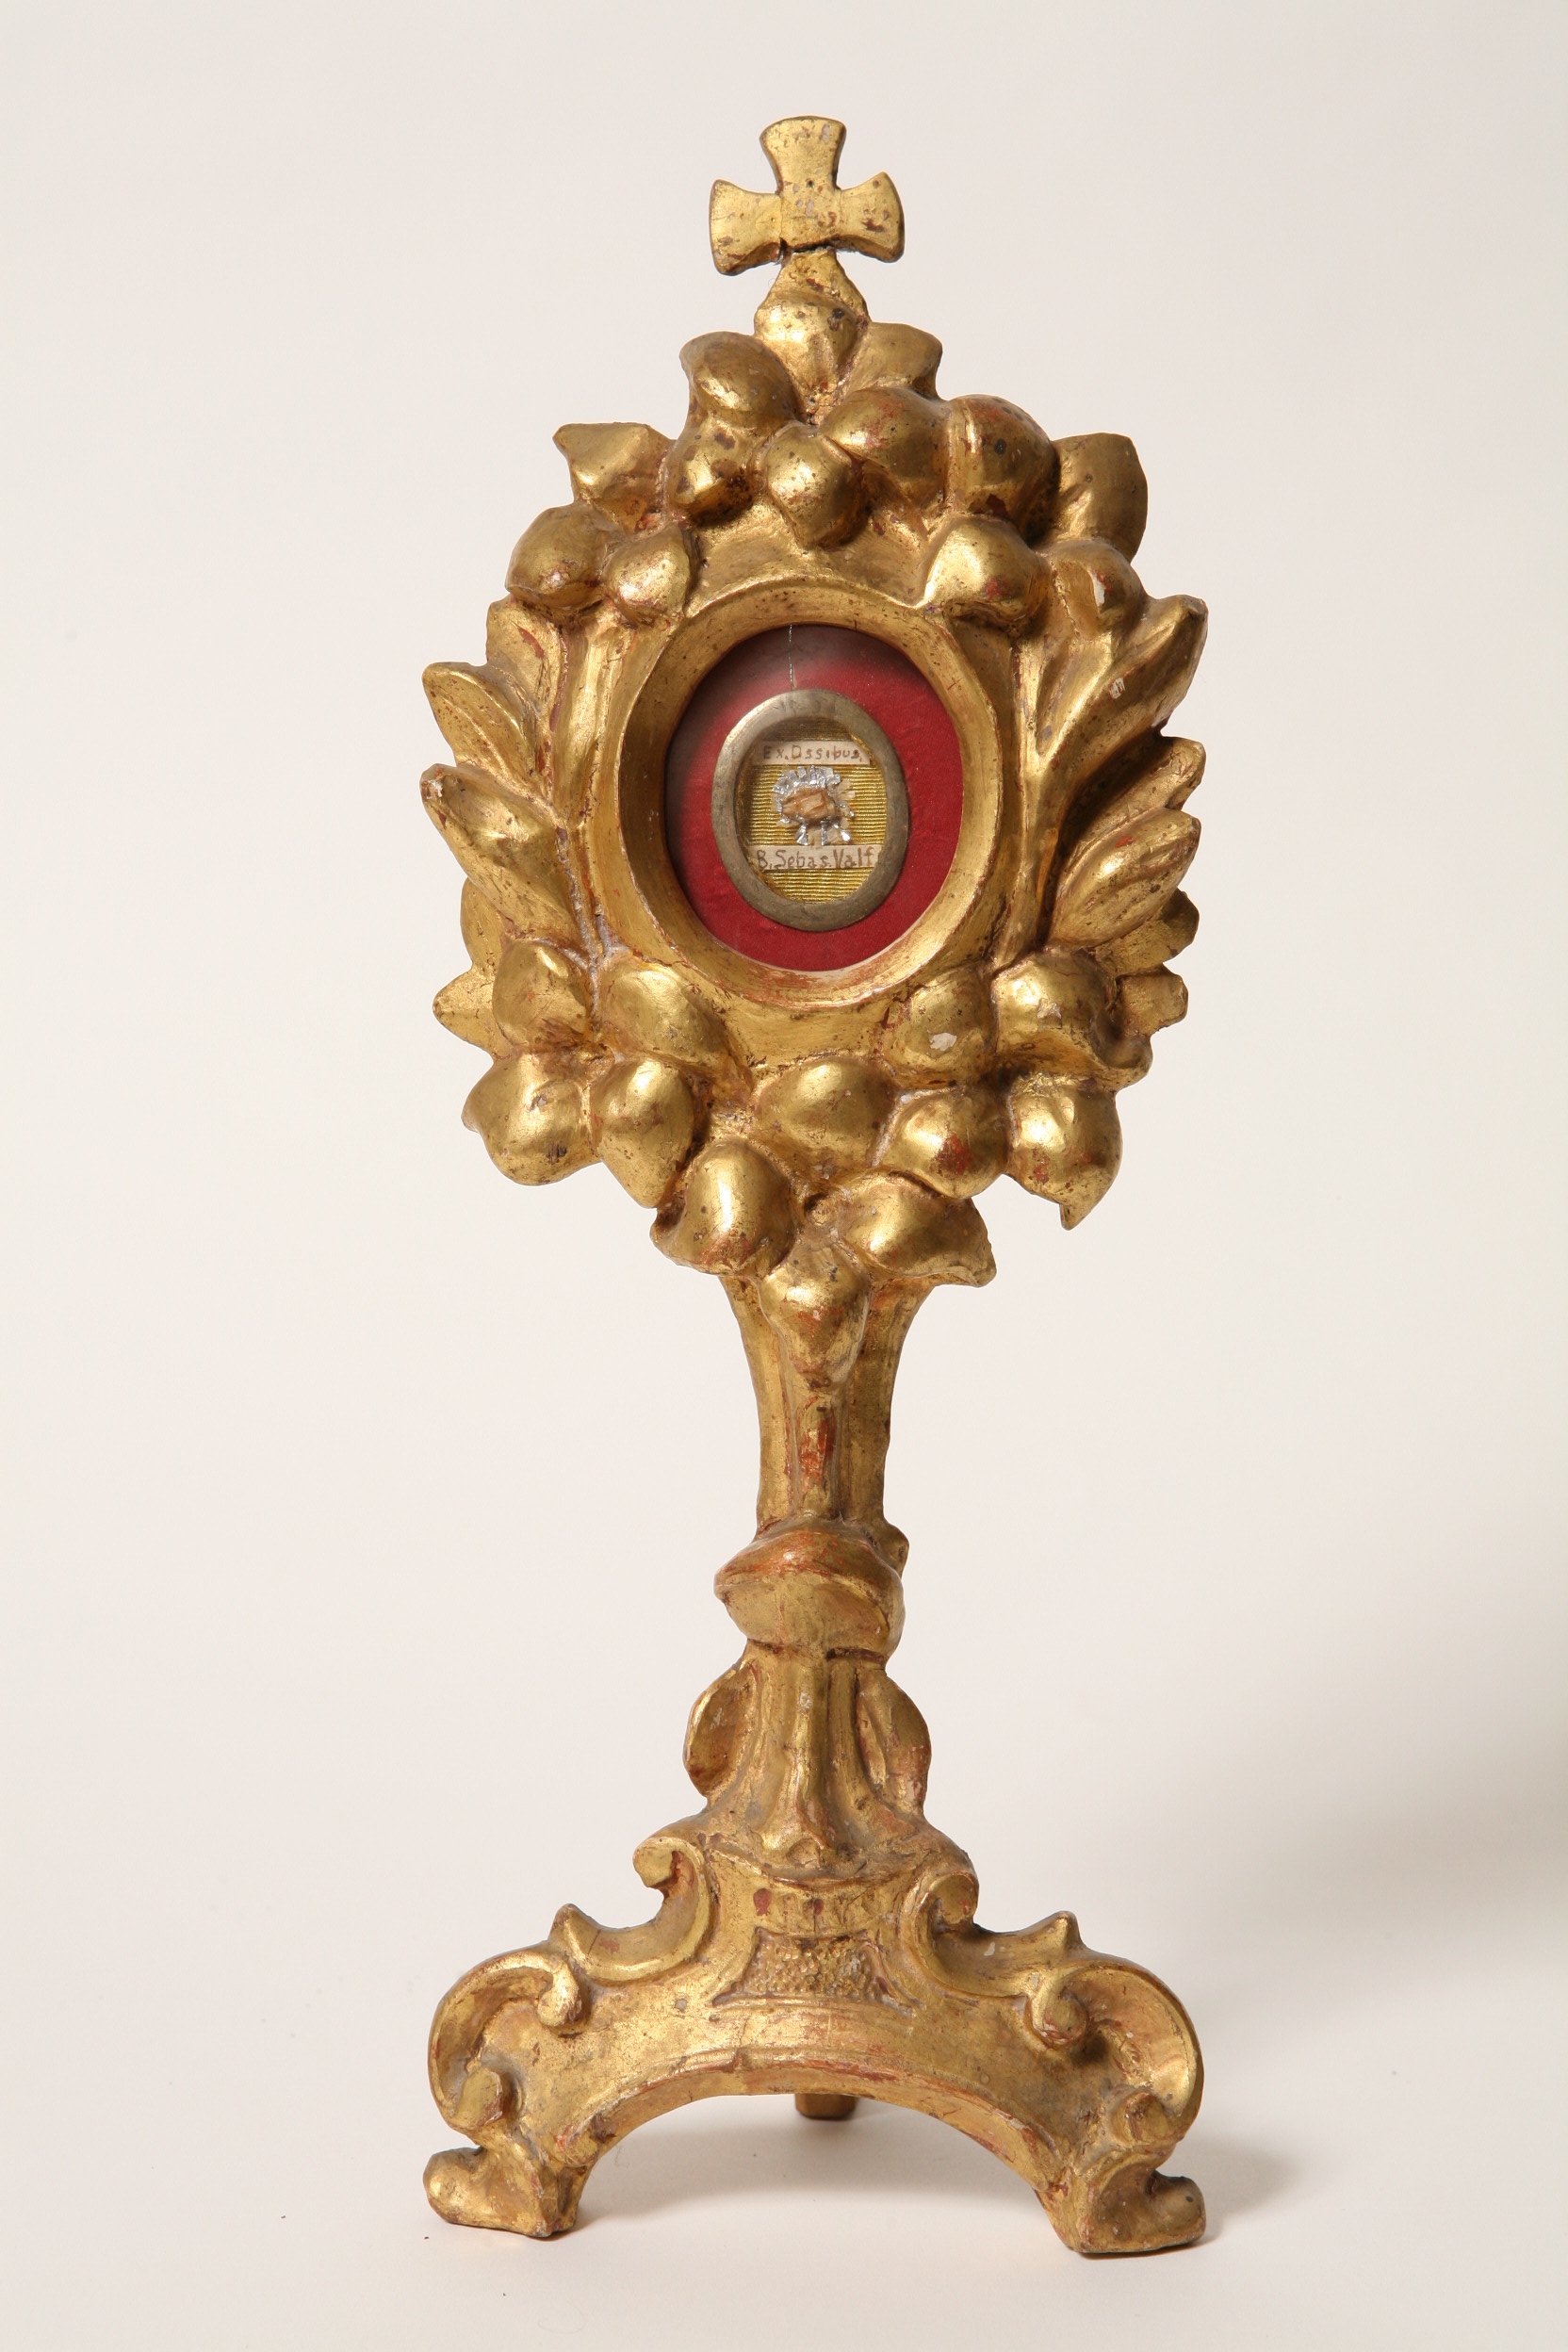 motivi decorativi floreali, croce patente (reliquiario-ostensorio, serie) - bottega veneta (meta' sec. XVIII)